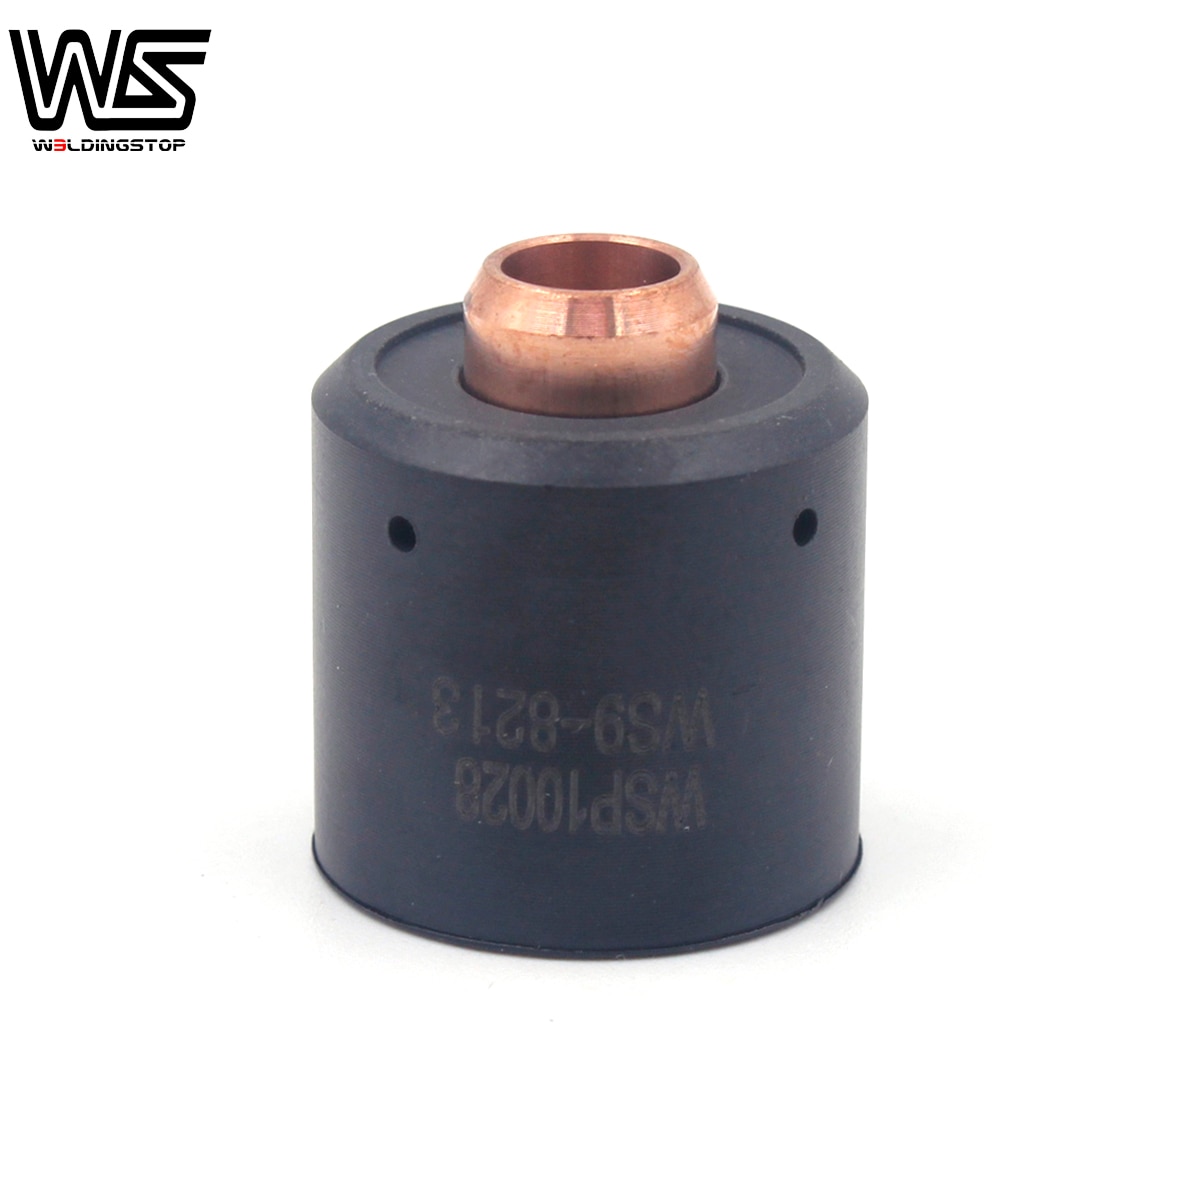 Nozzle Electrode Start Cartridge Shield Cap 9-8210 9-8215 9-8237 9-8213/9-8277 for SL60 SL100 Torch PK22